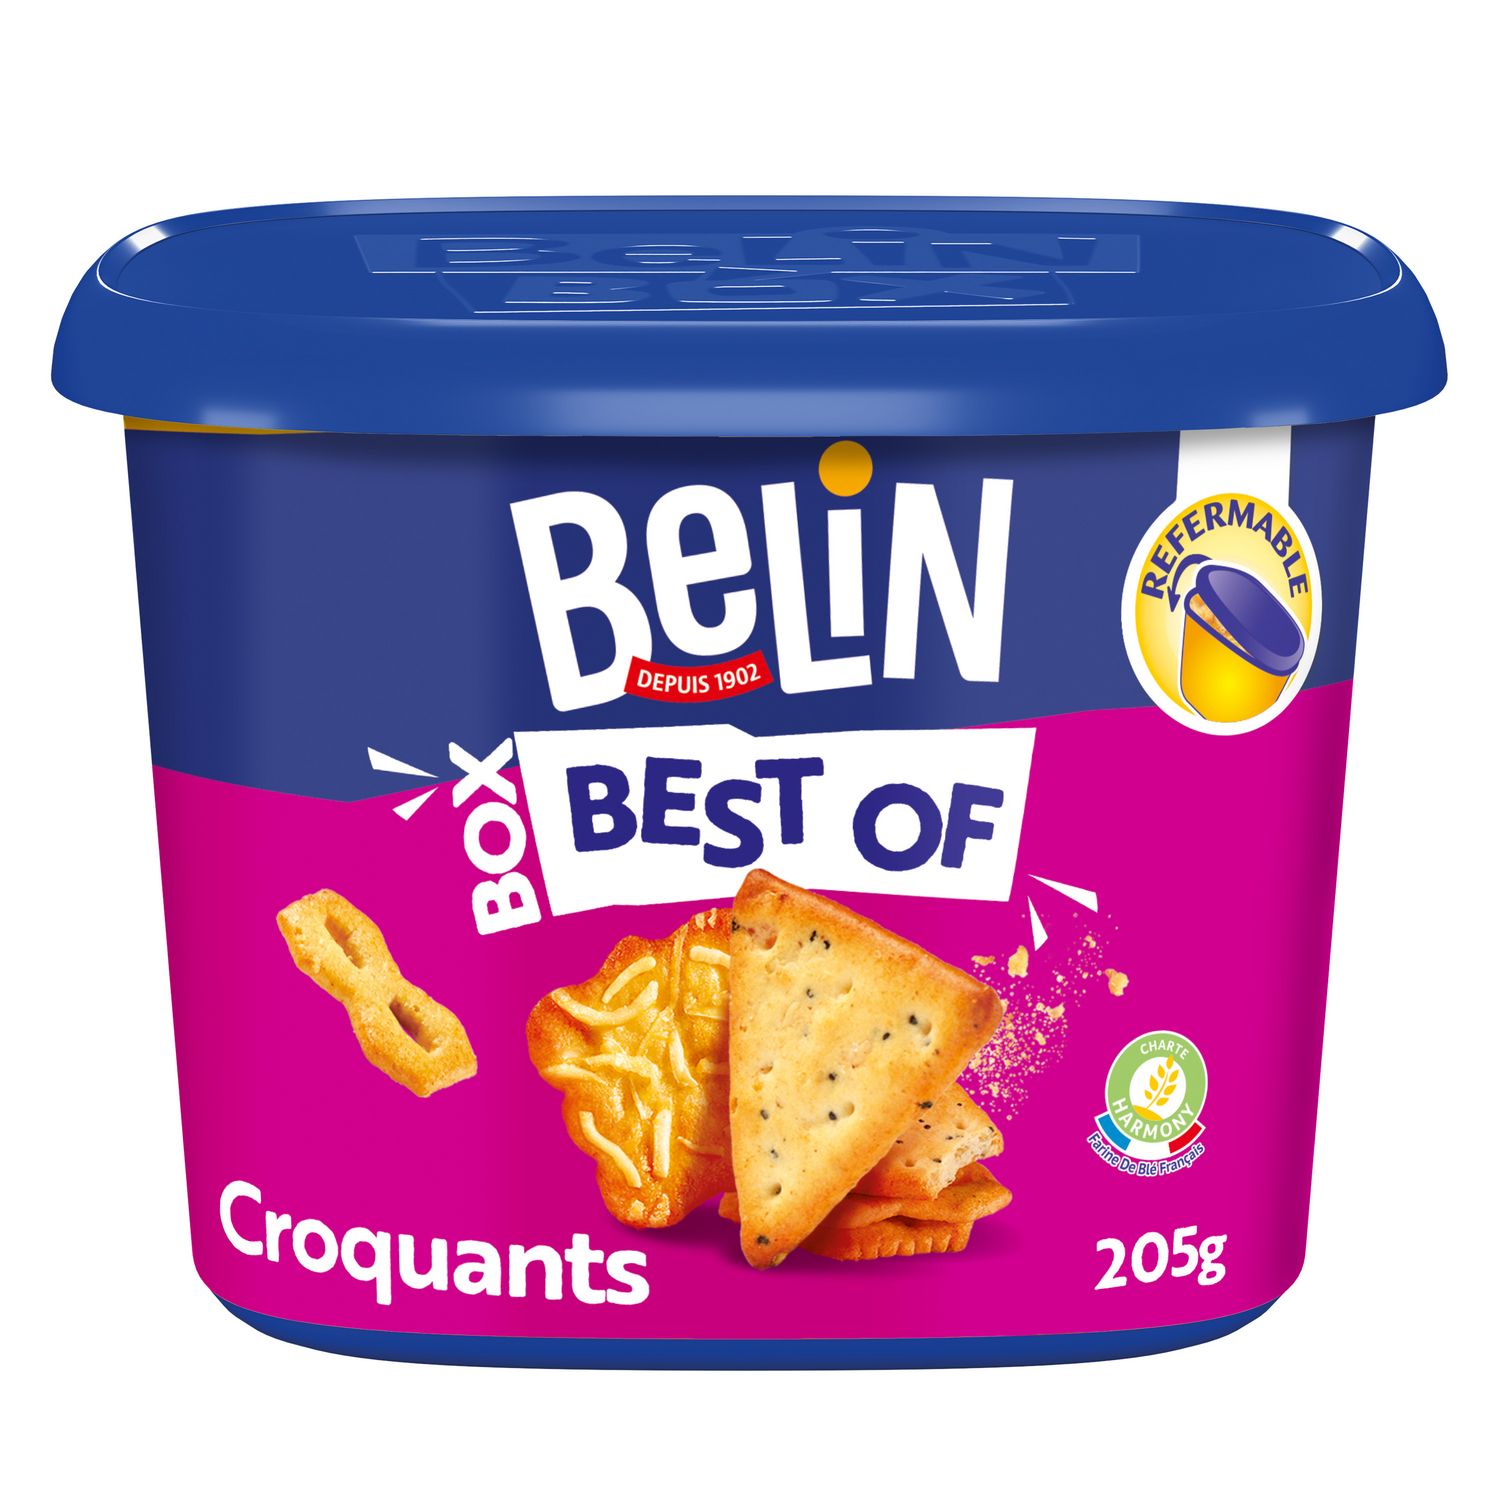 Belin Biscuits La Box Monaco Emmental 205g